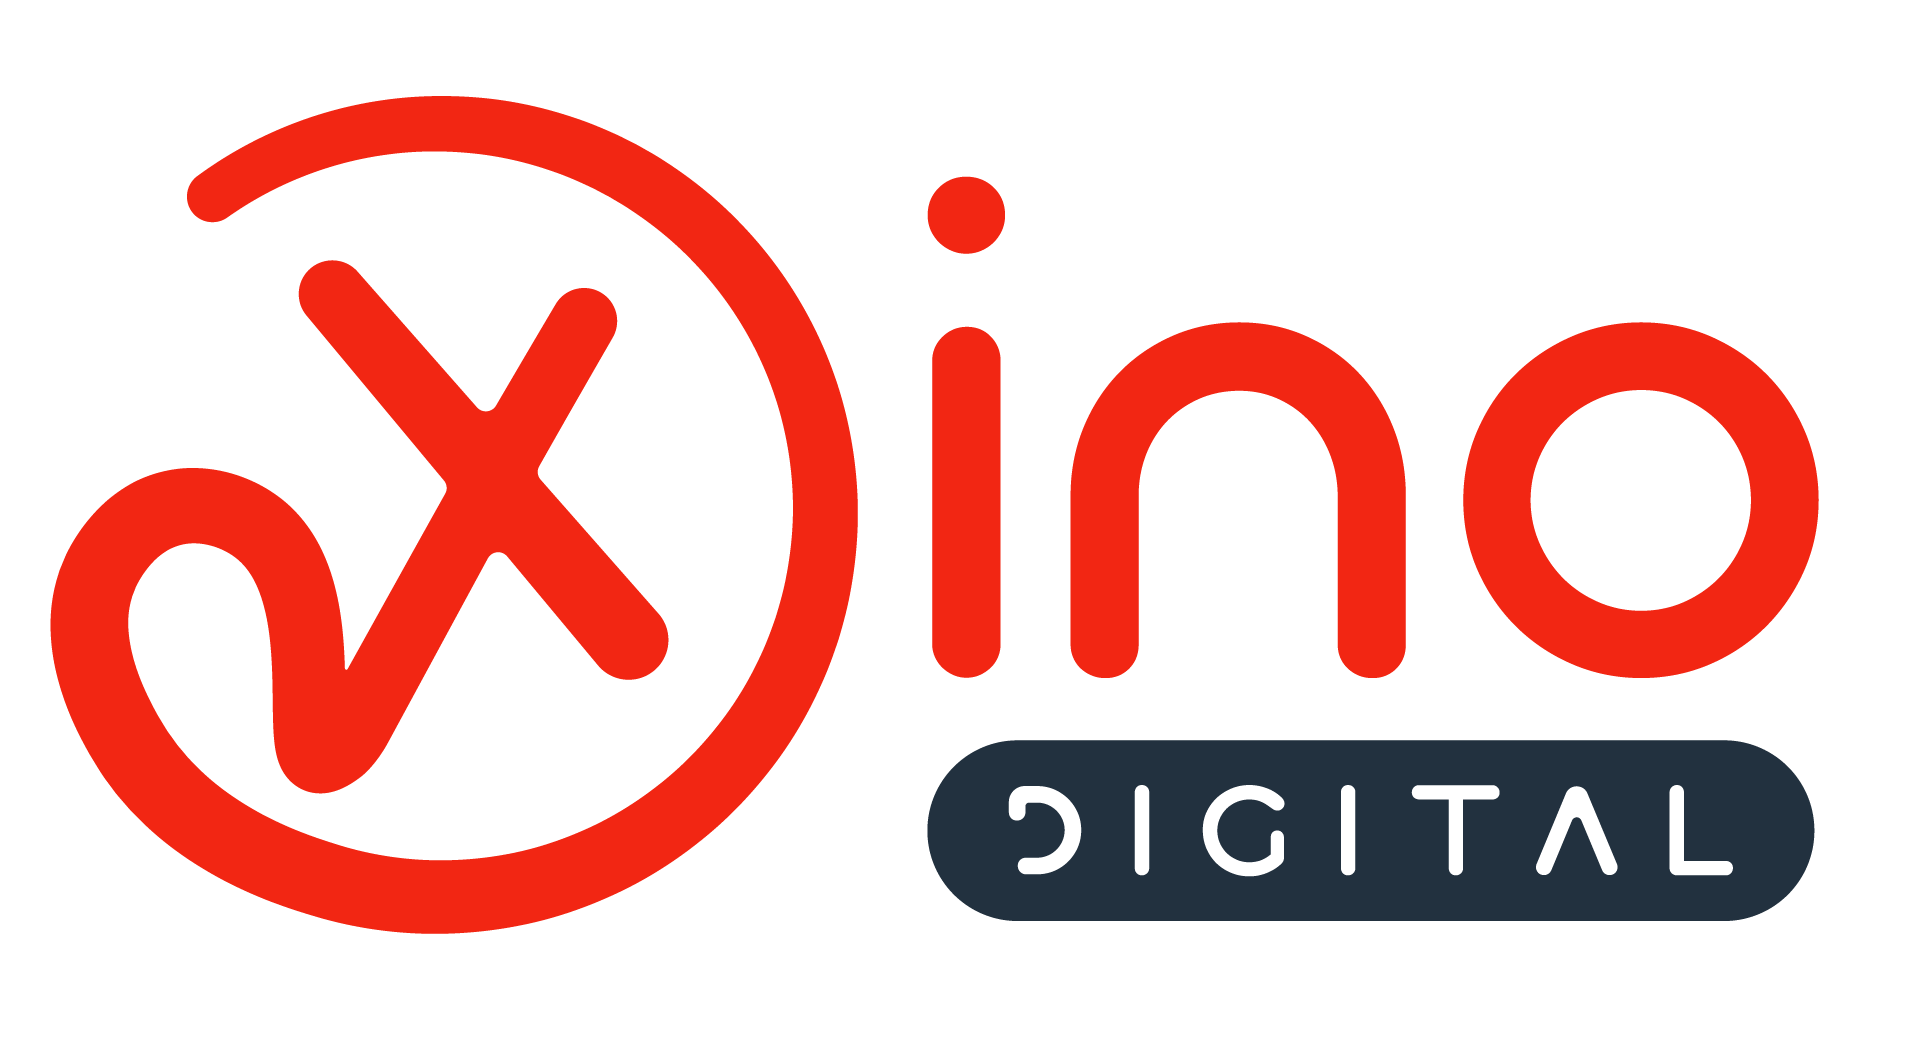 Xino Digital